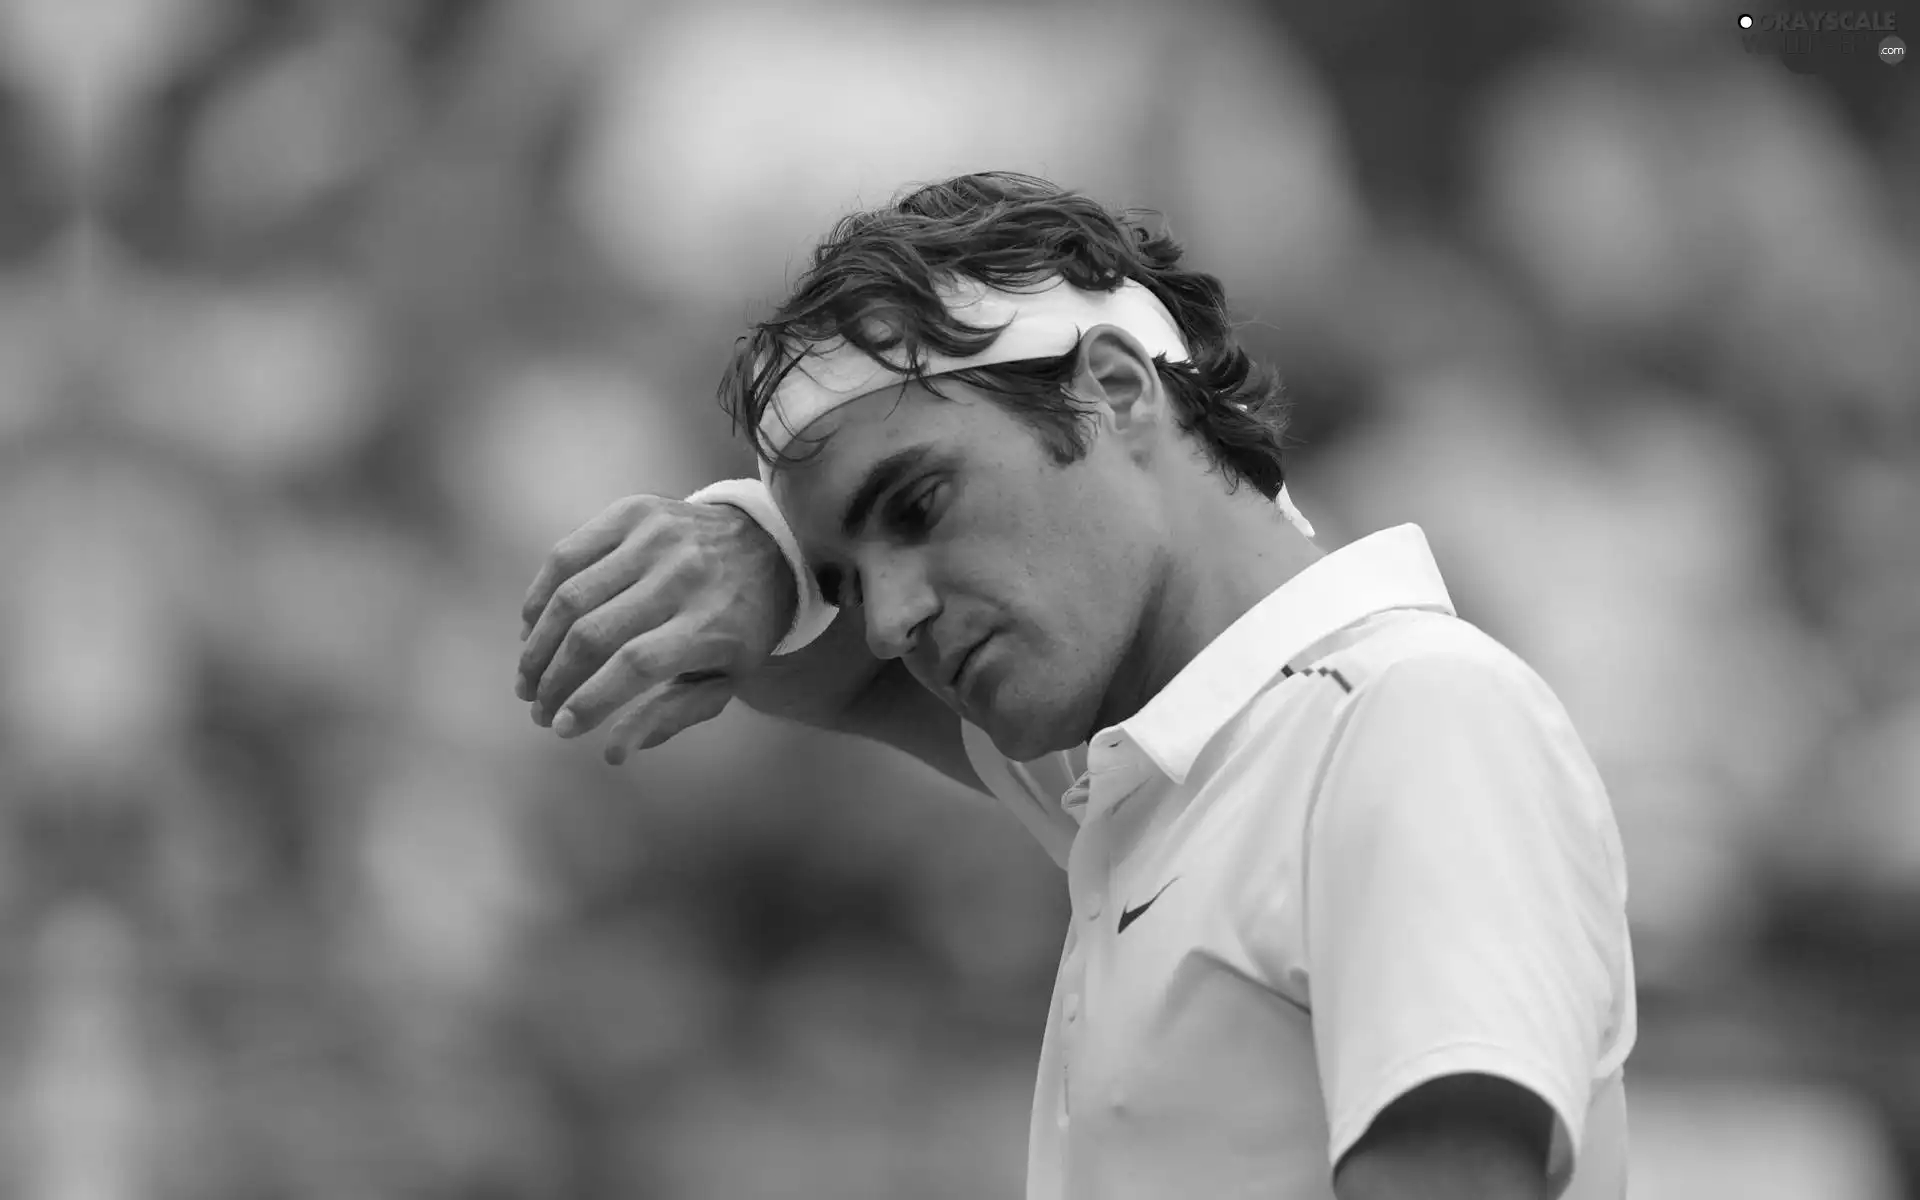 Roger Federer, Tennis player